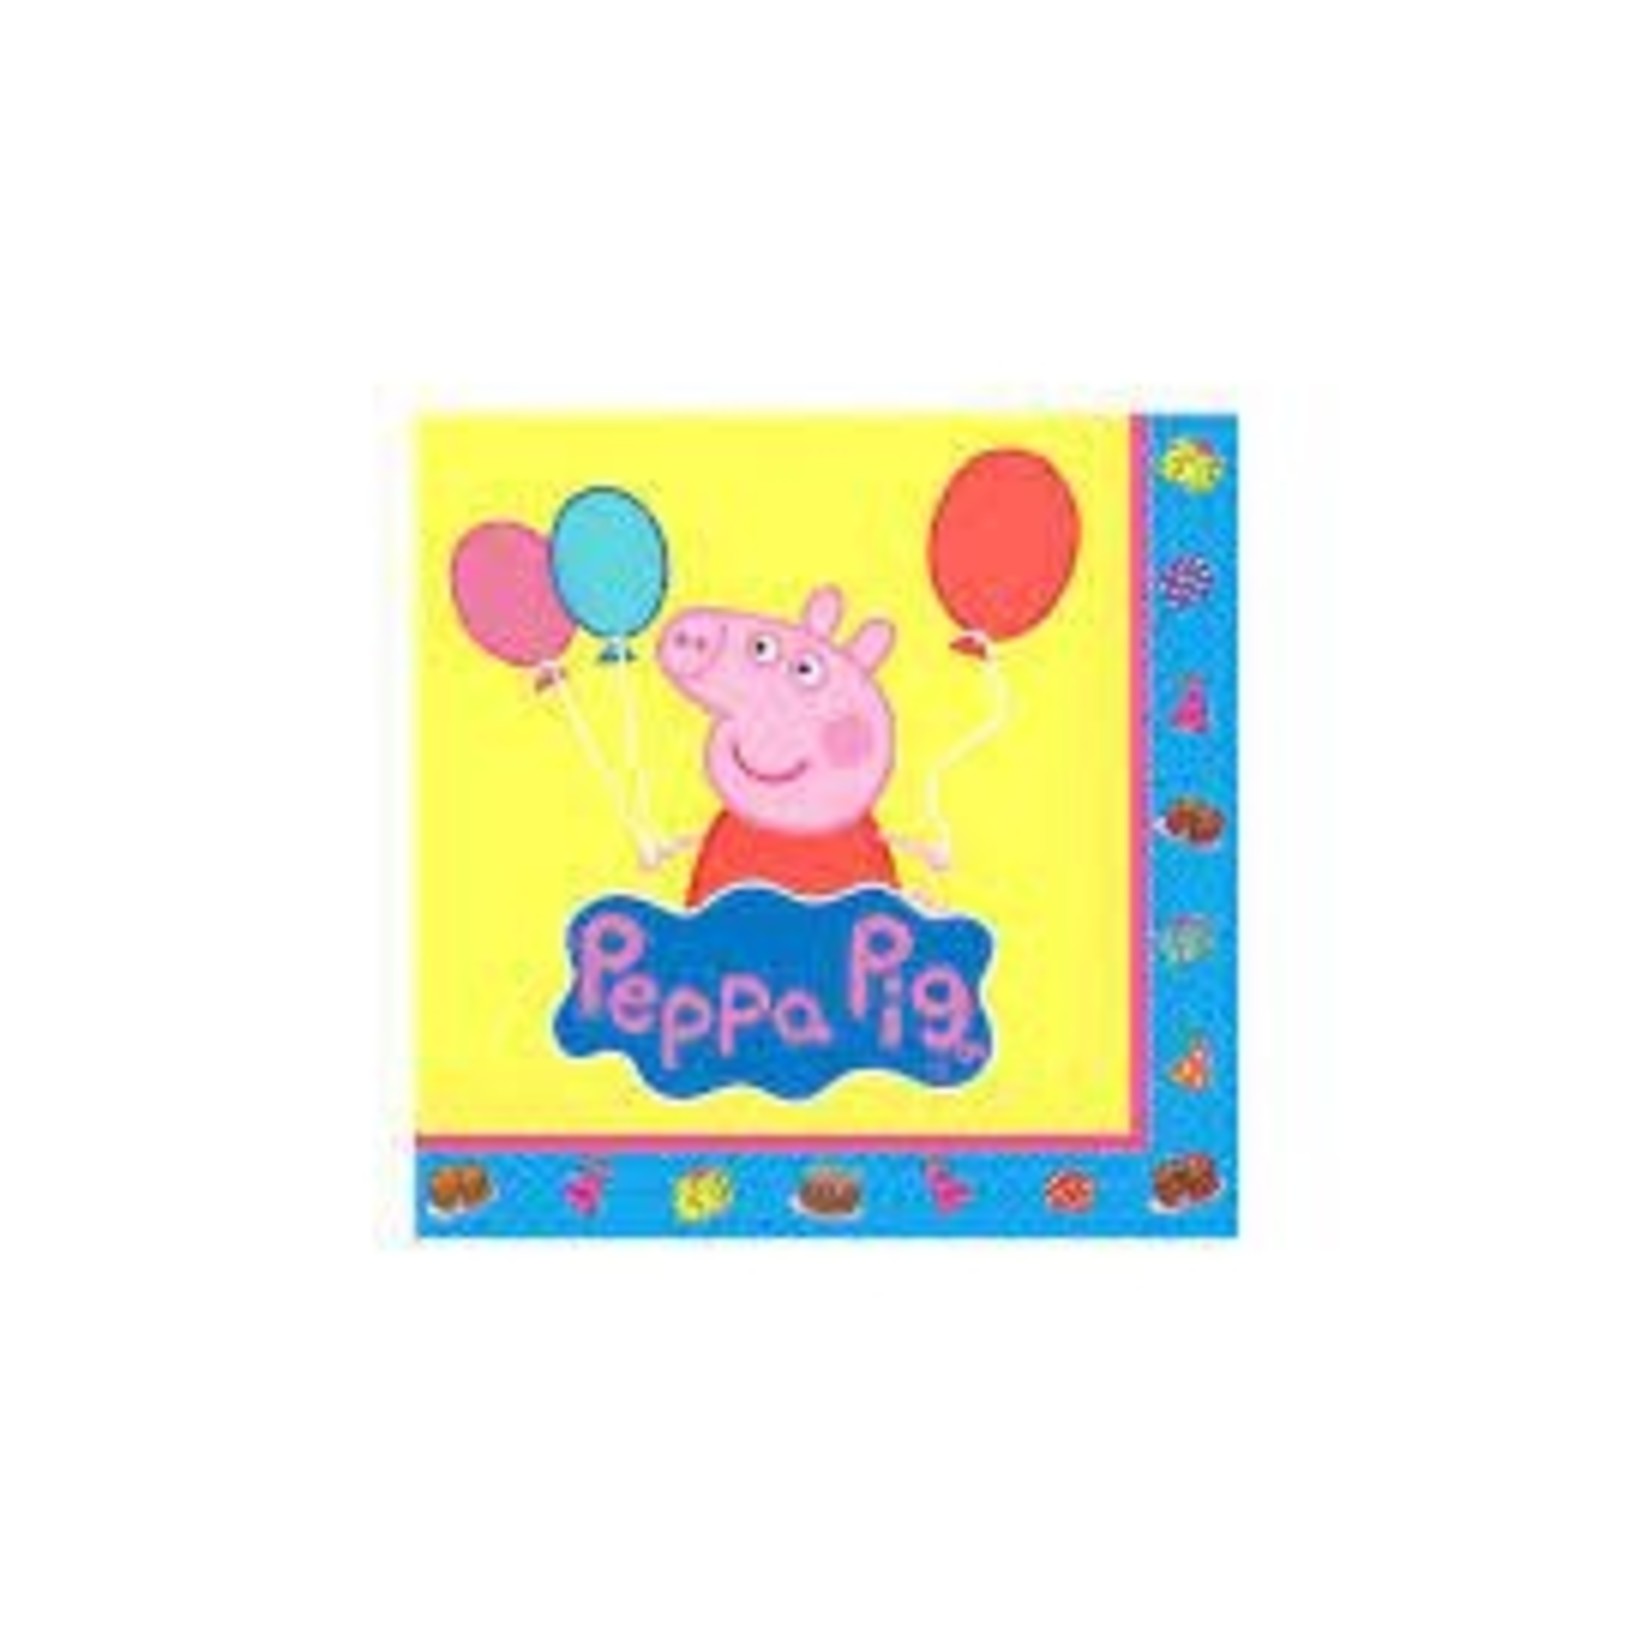 Peppa Pig Napkins 9x9